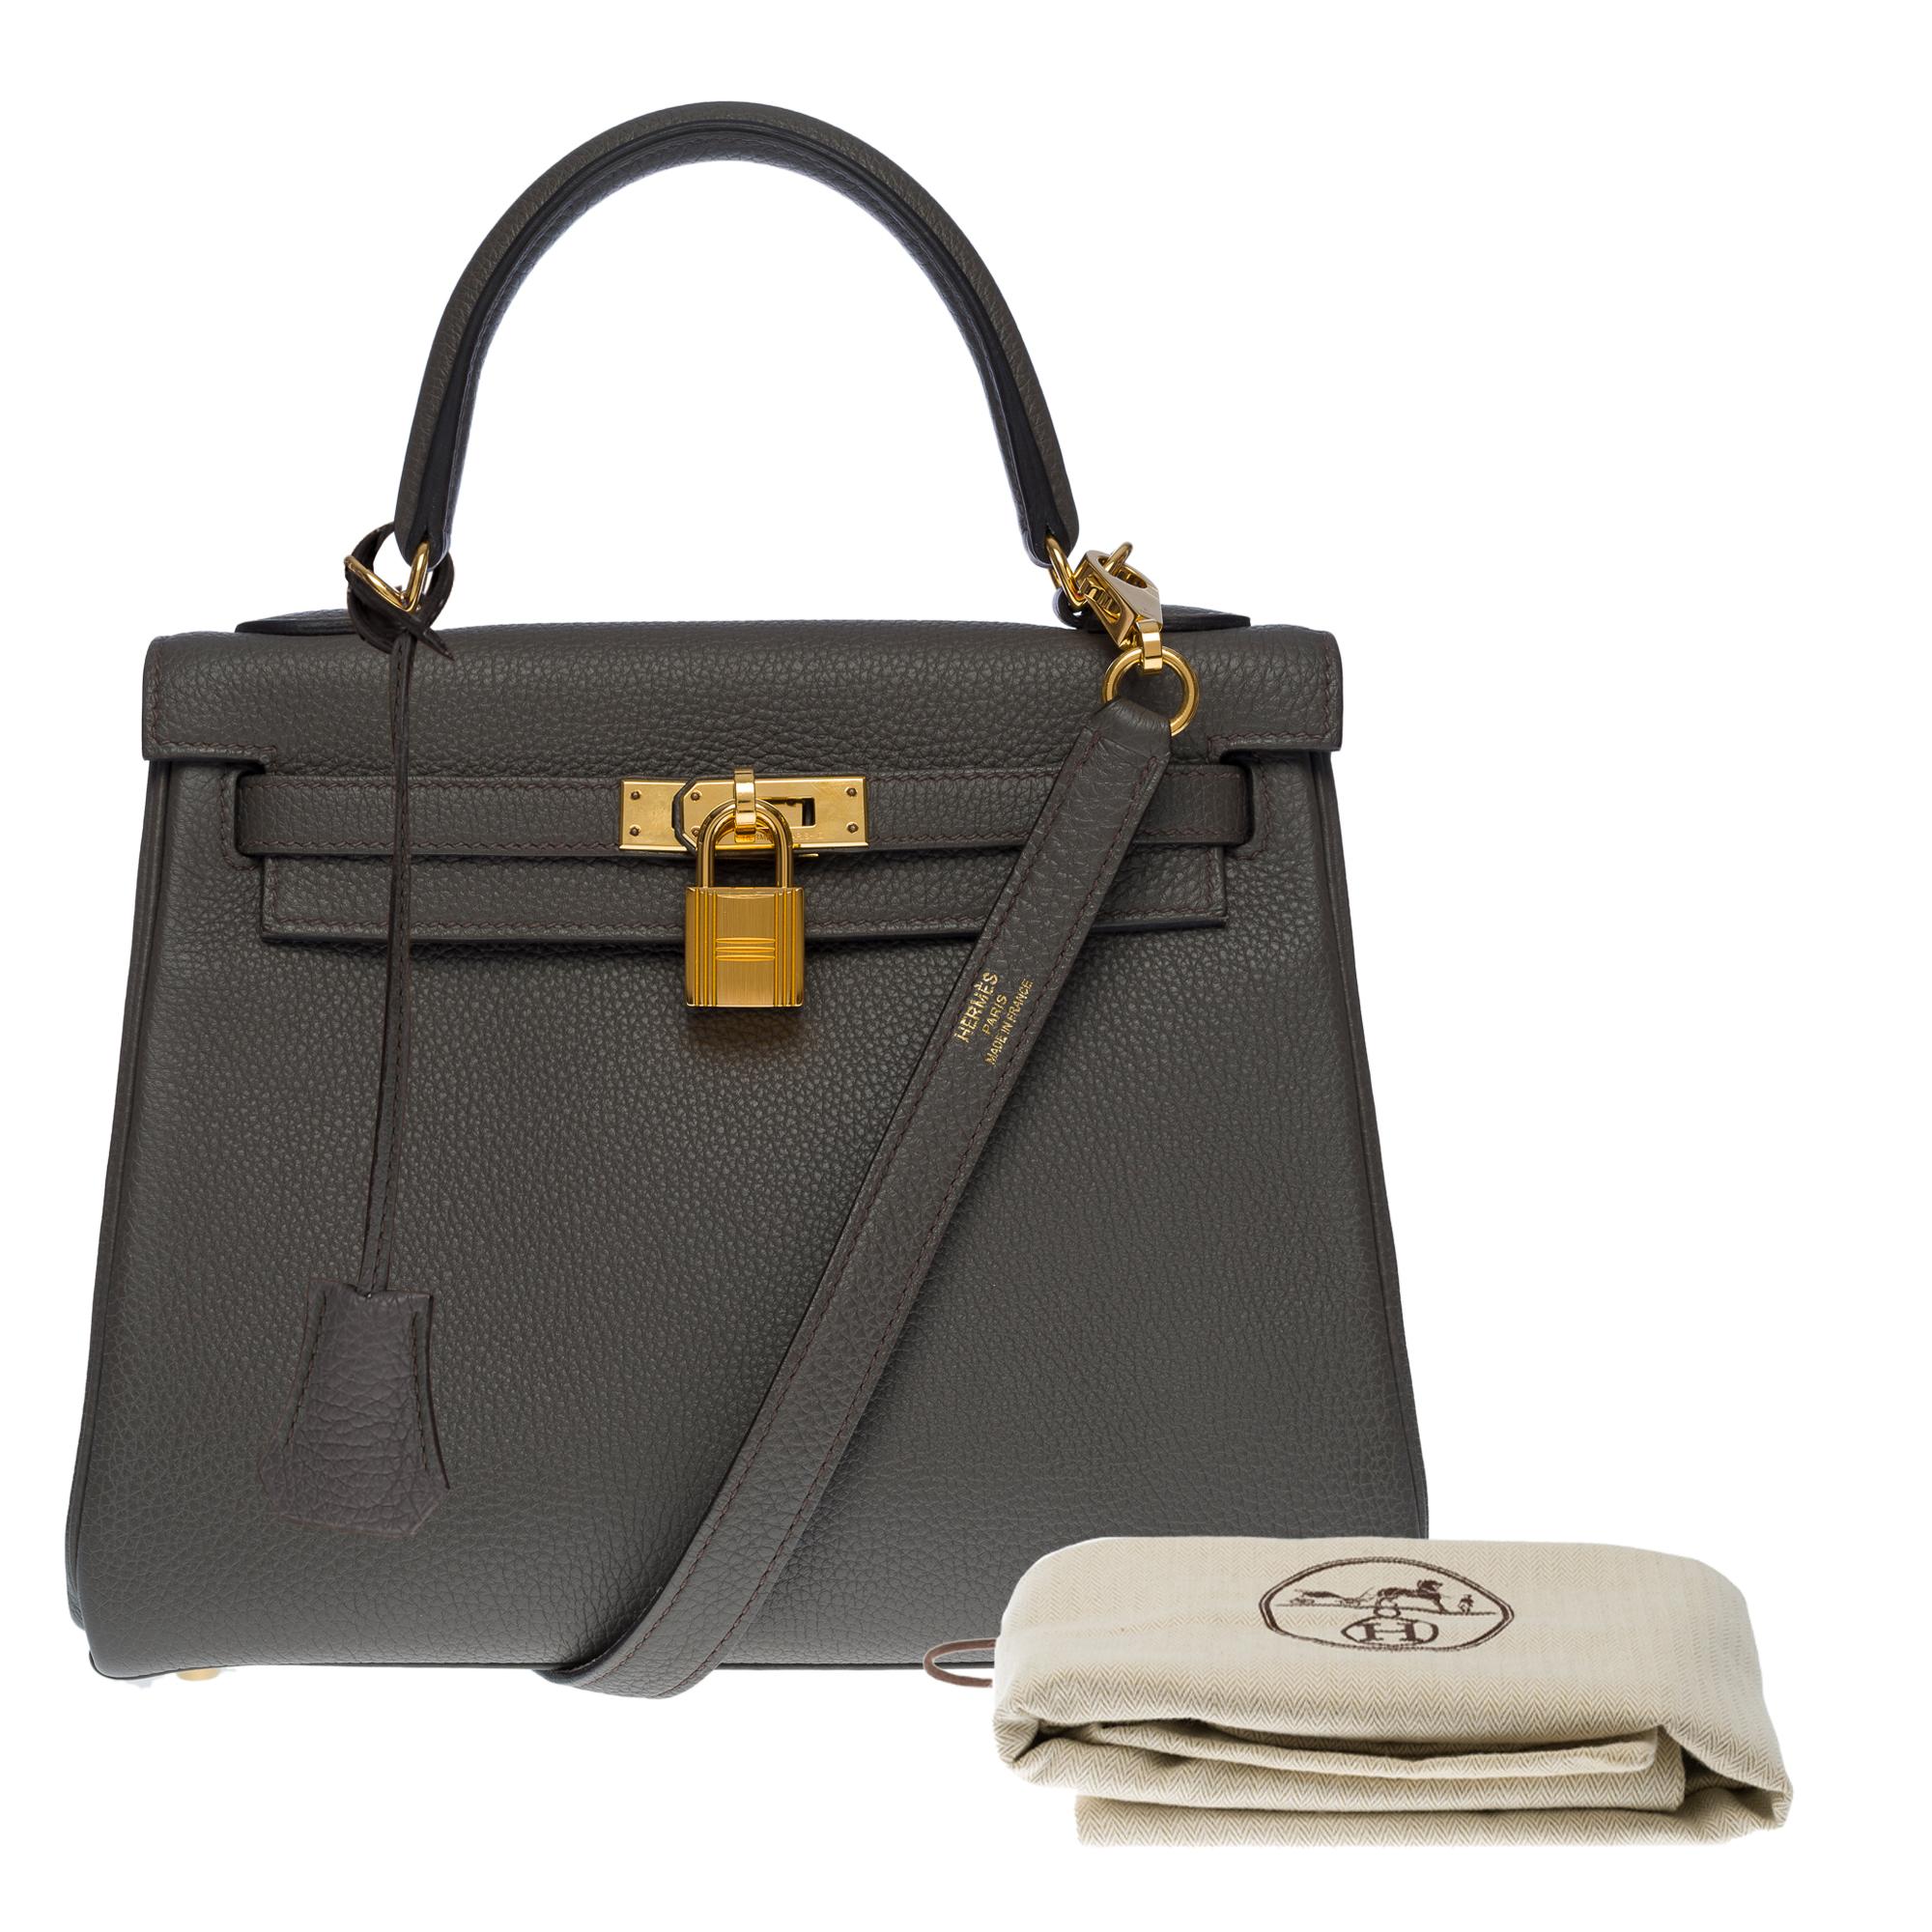 Amazing & Rare Hermès Kelly 25 handbag strap in Grey Togo etain leather, GHW 5